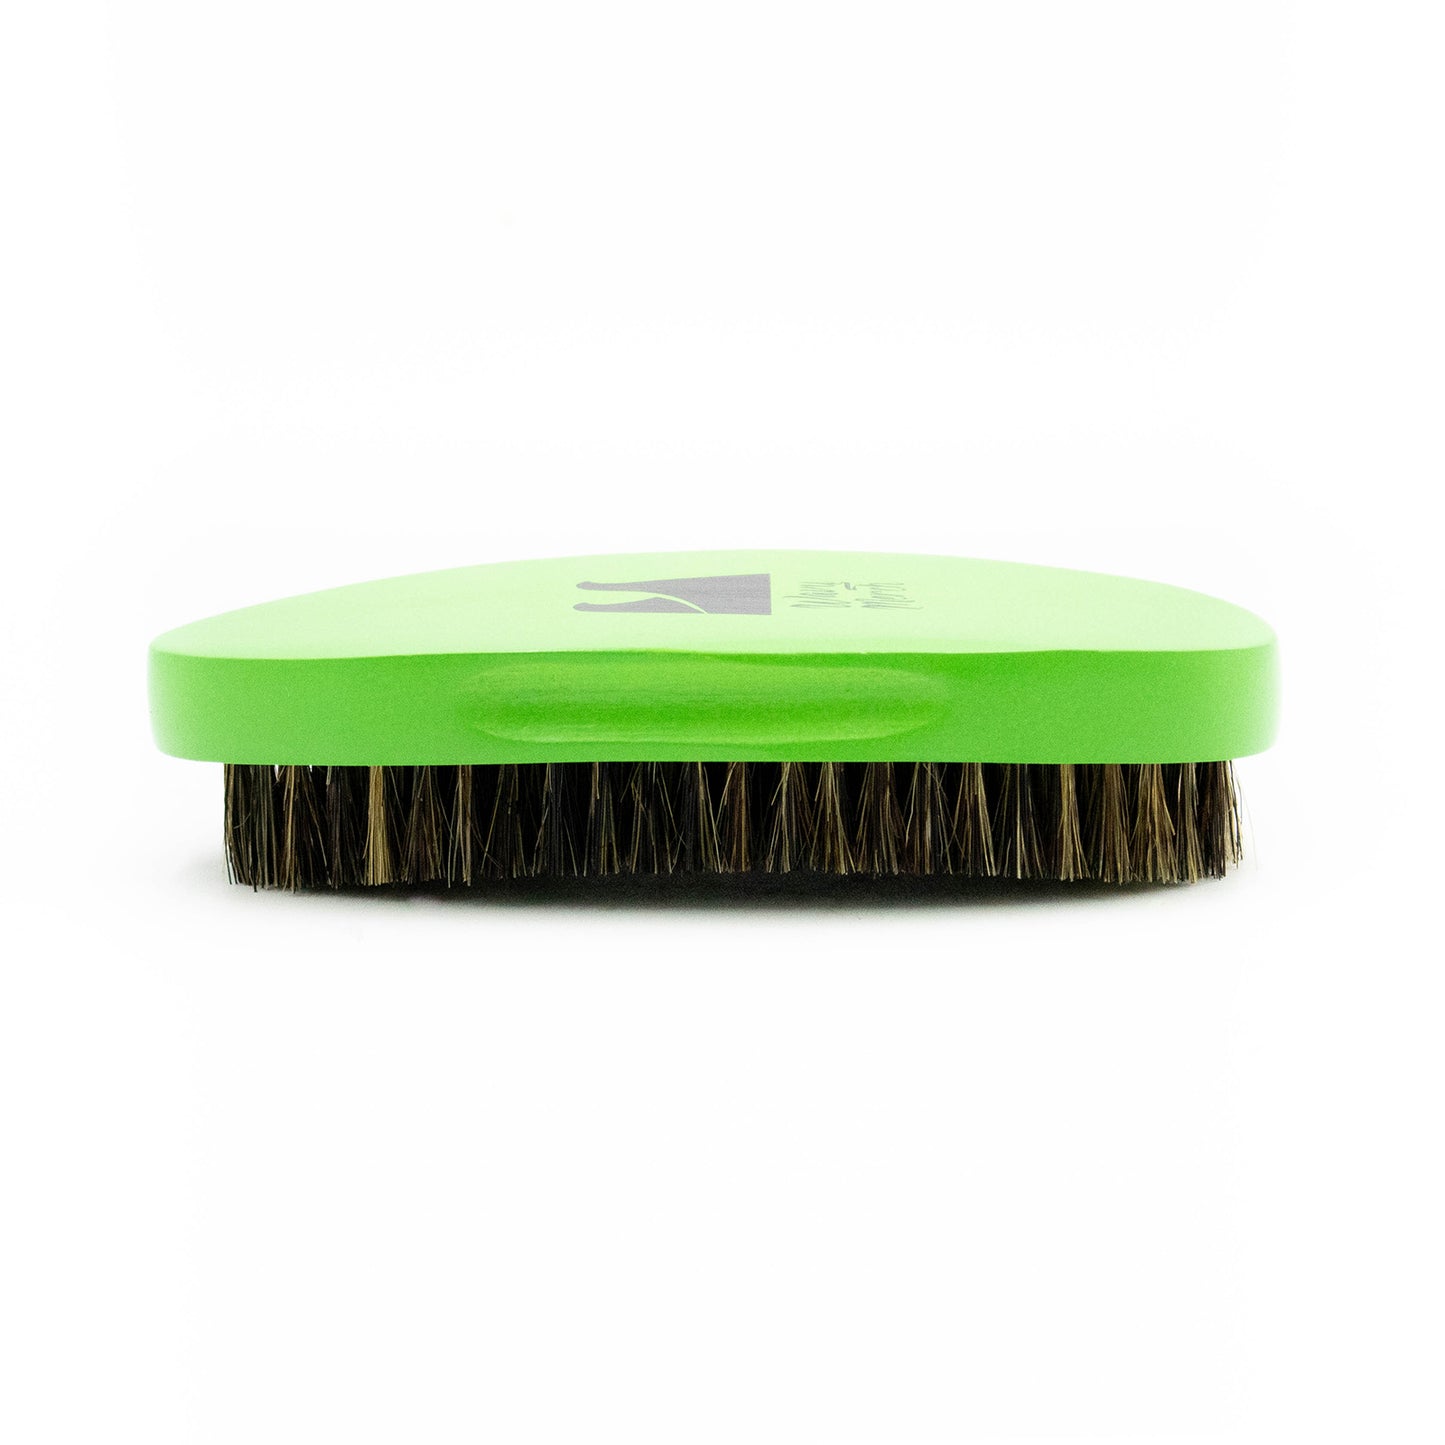 Slime Green Curved Medium Brush